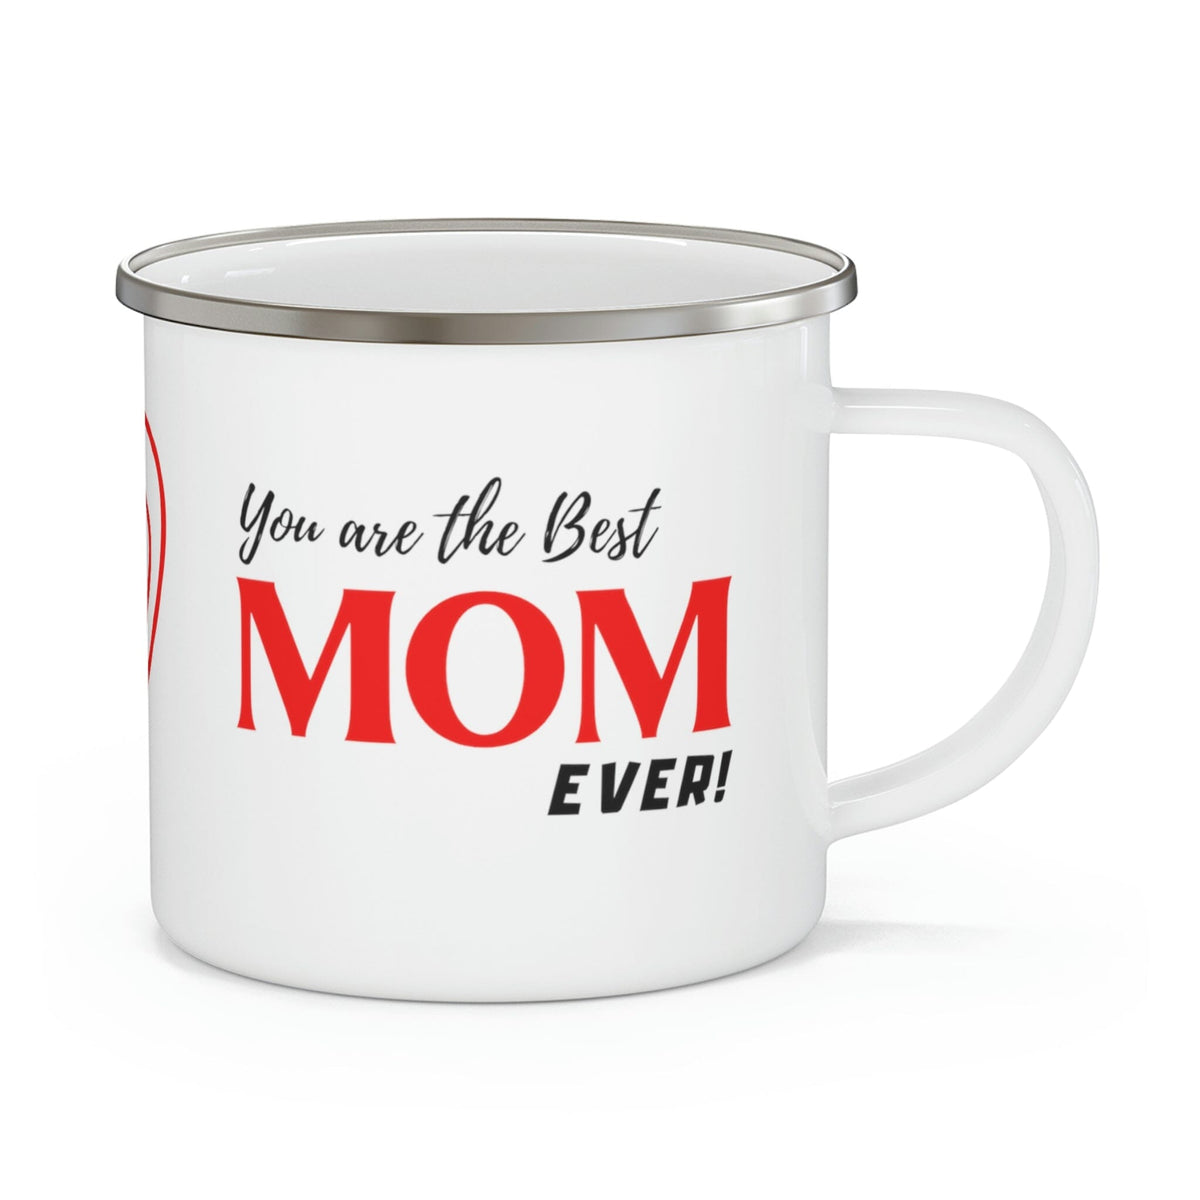 Coffee Mug with love message: You are the best MOM ever! - Enamel Camping Mug Mug Printify 12oz 